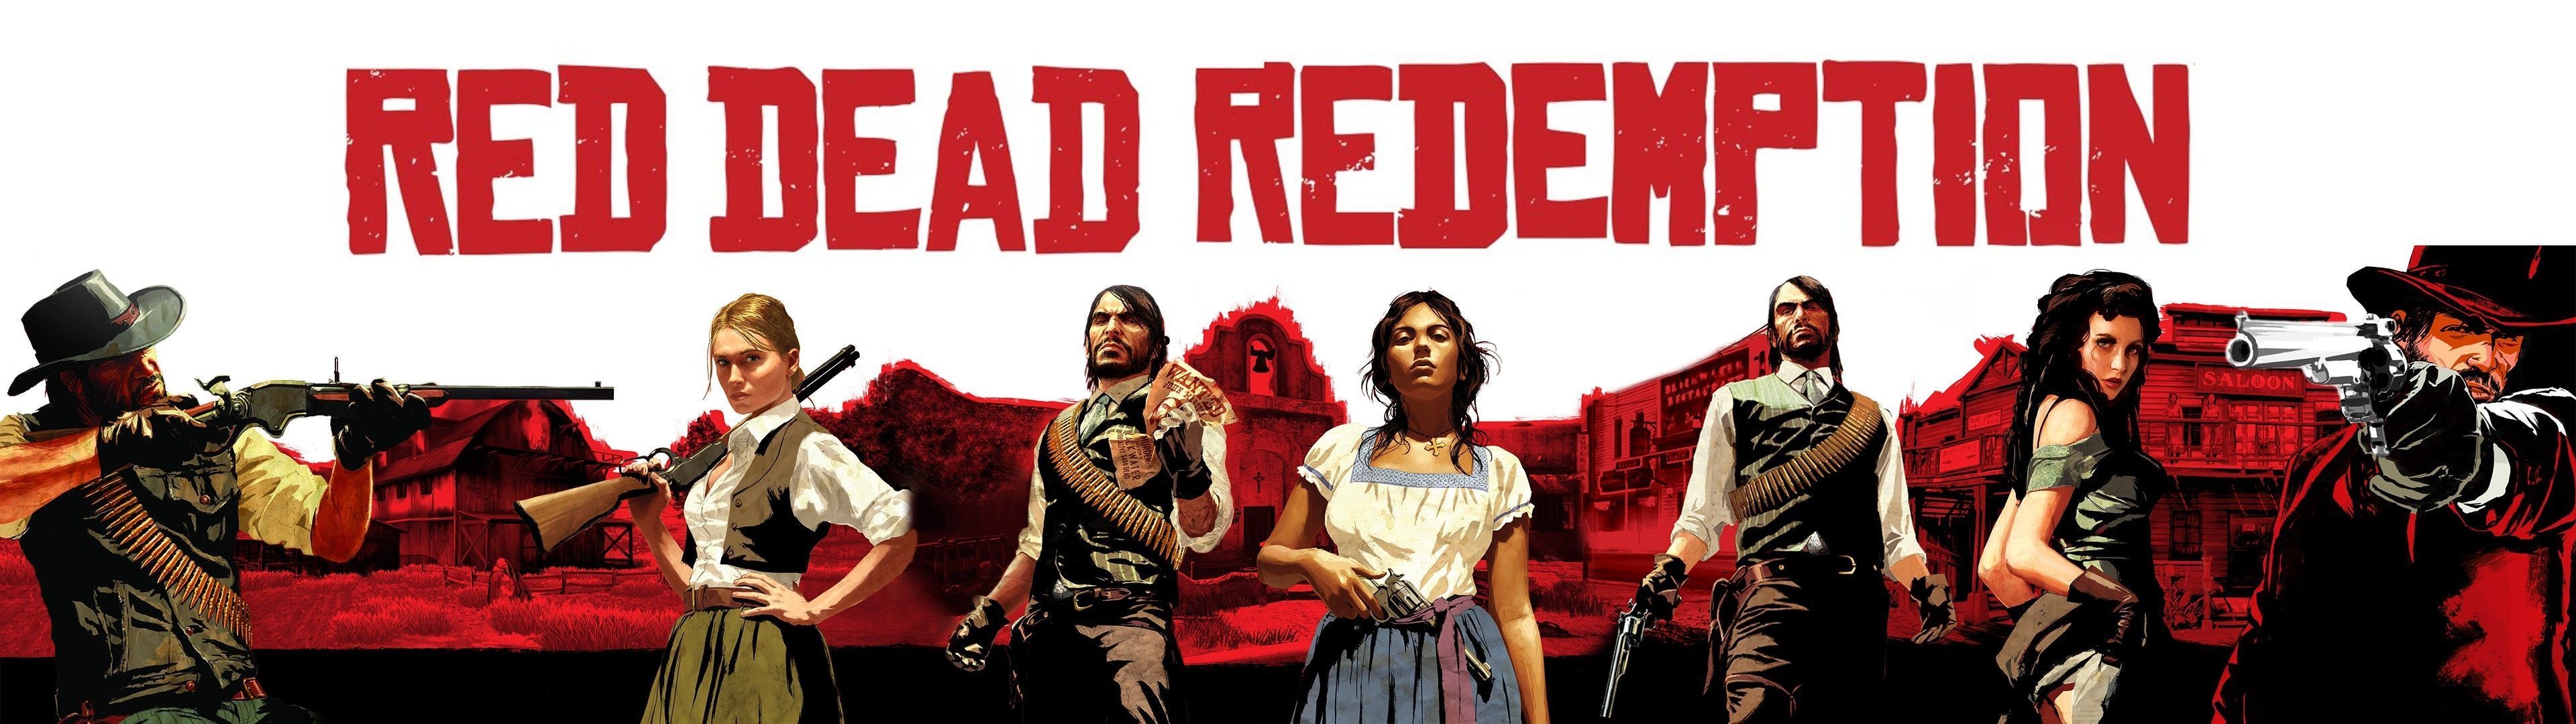 3840x1080 Red Dead Redemption HD Desktop Wallpapers for